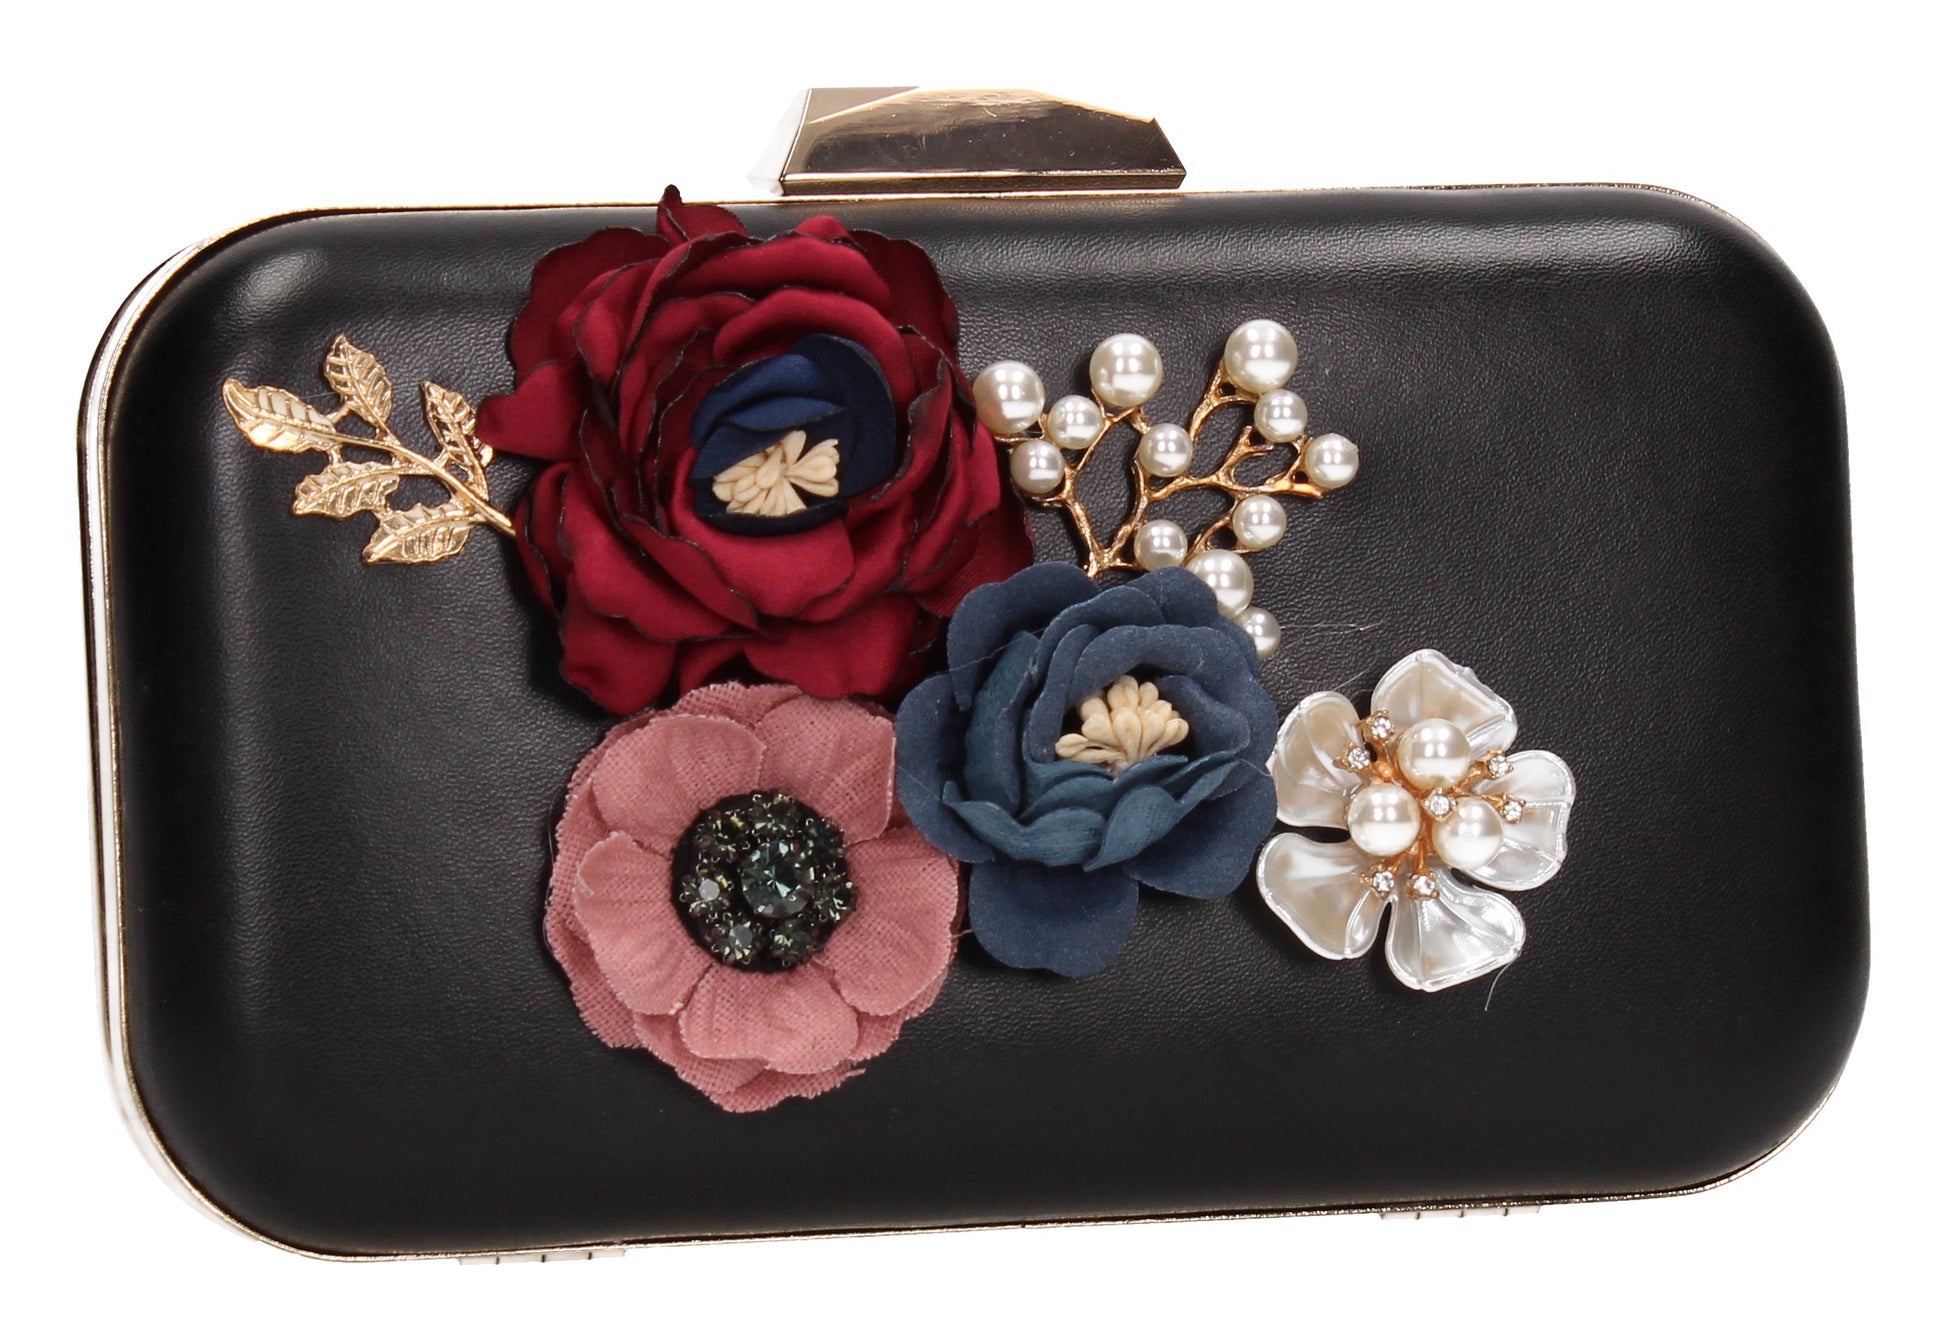 SWANKYSWANS Eliza Floral Clutch Bag Black Cute Cheap Clutch Bag For Weddings School and Work